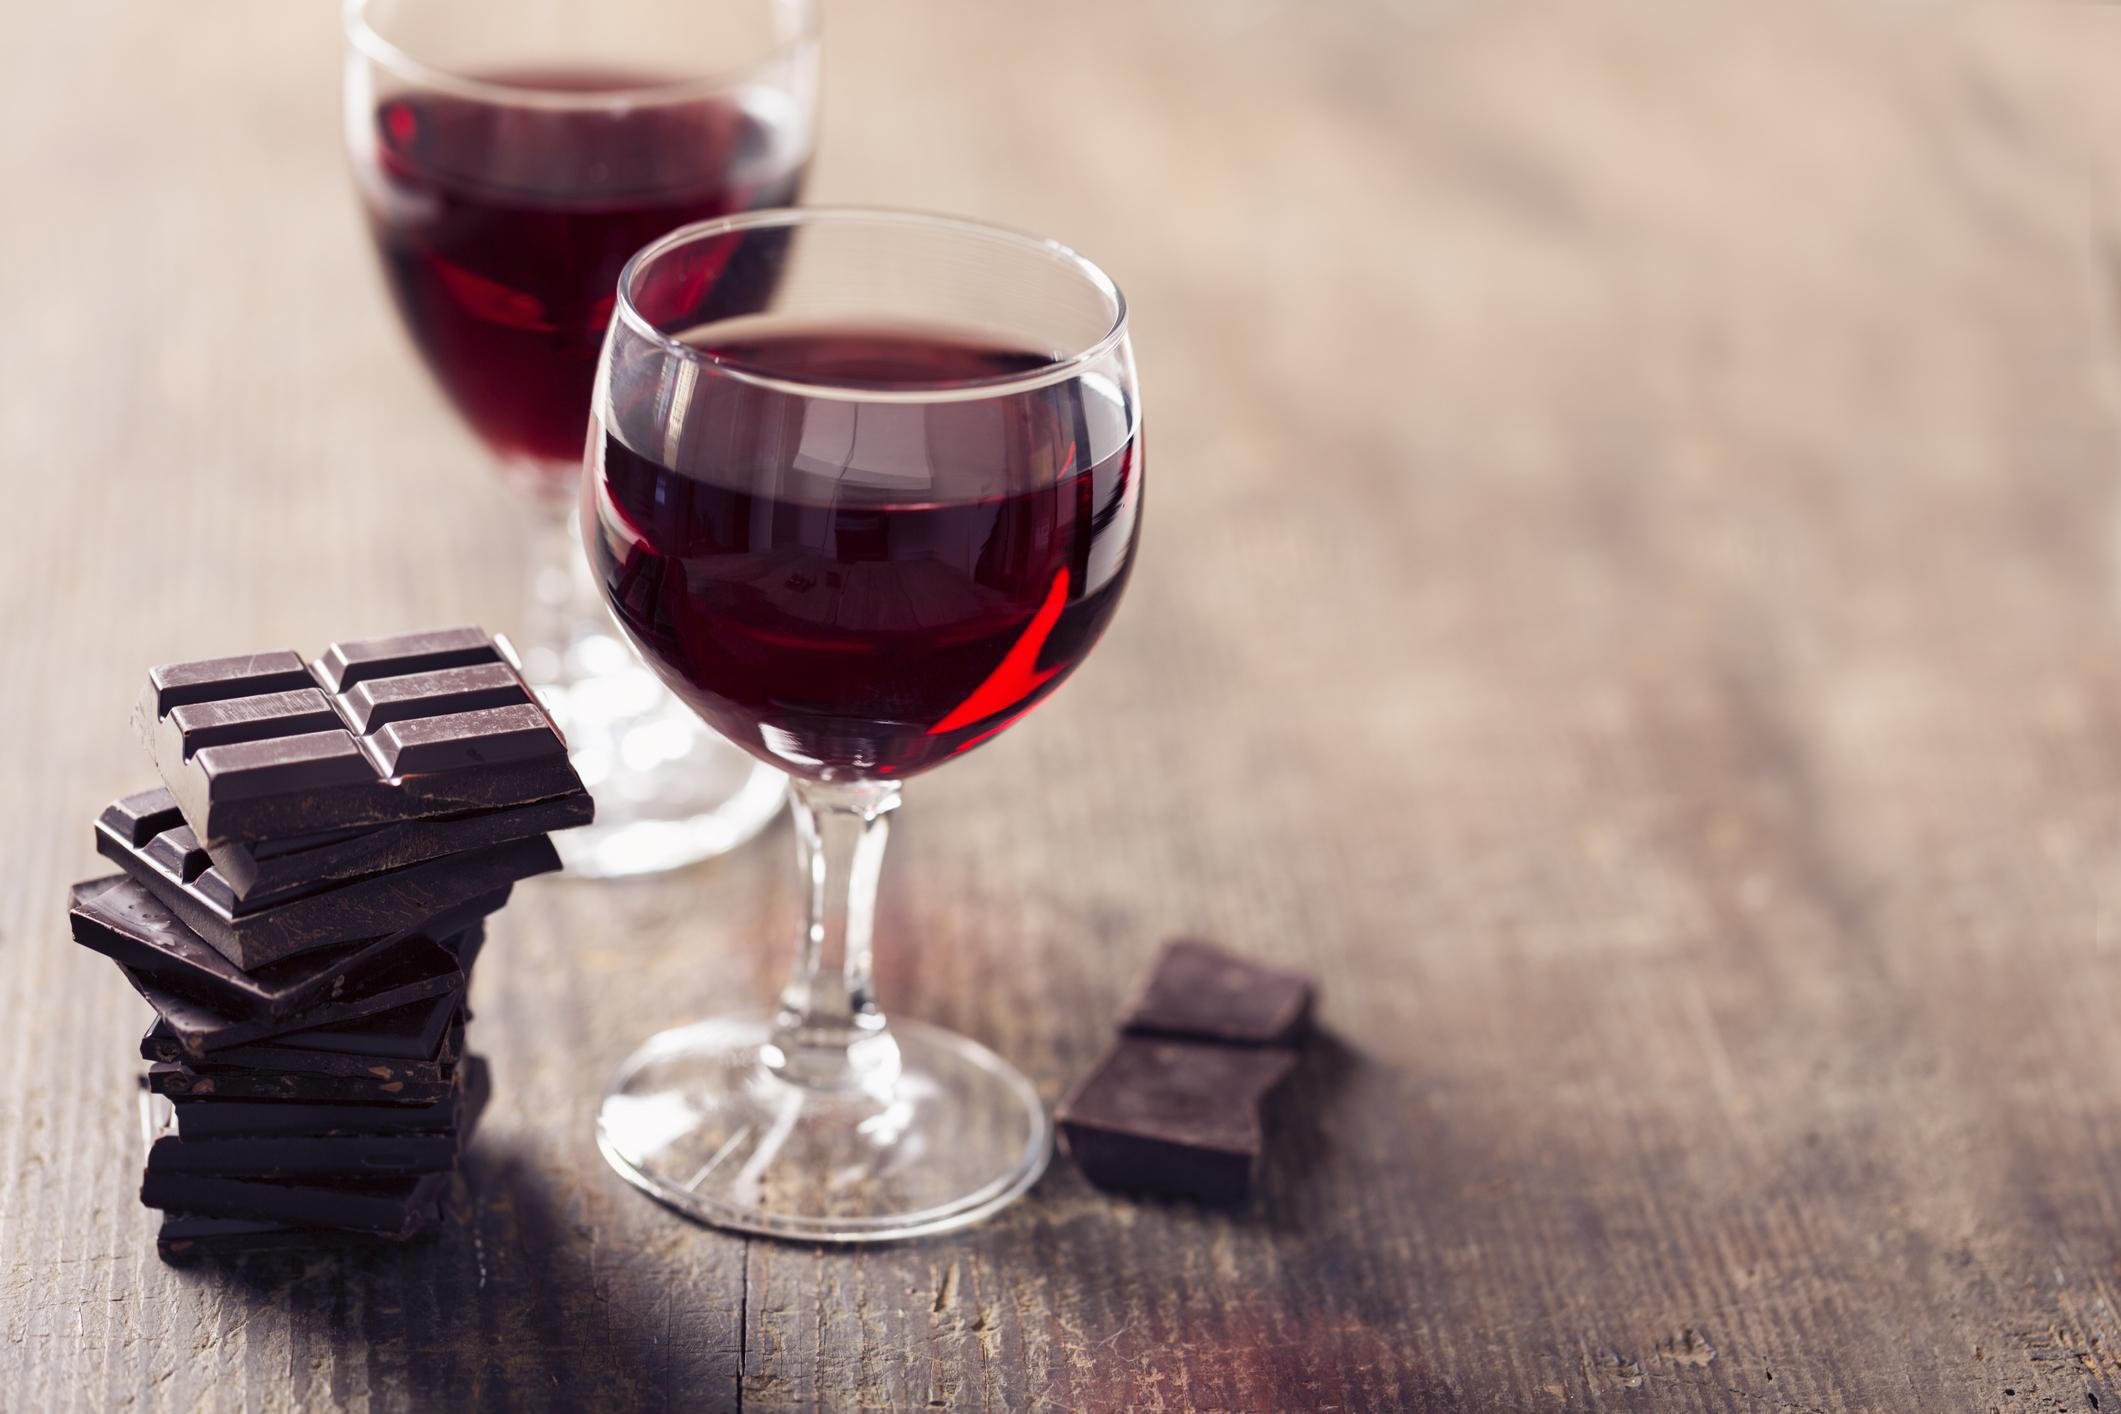 Do Red Wine and Dark Chocolate Have Health Benefits?